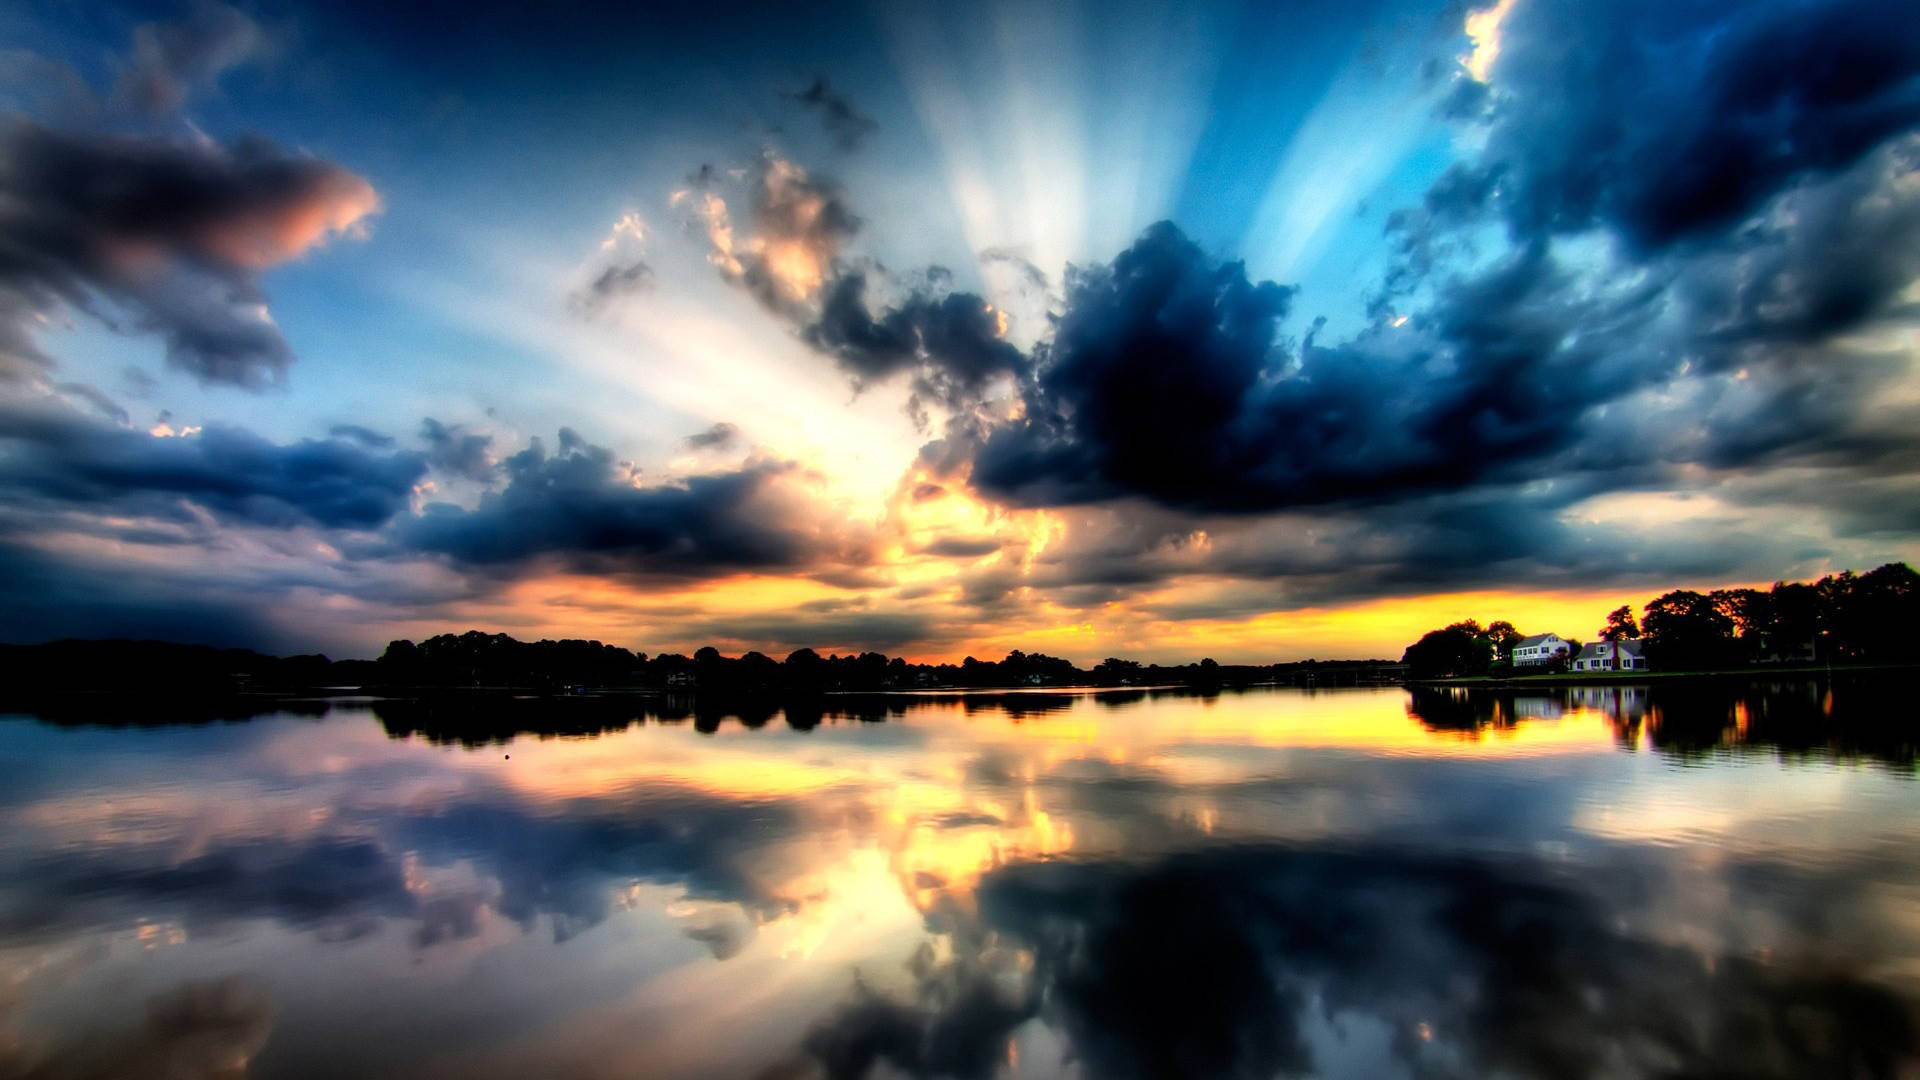 Macbook Air Water Sunset Background